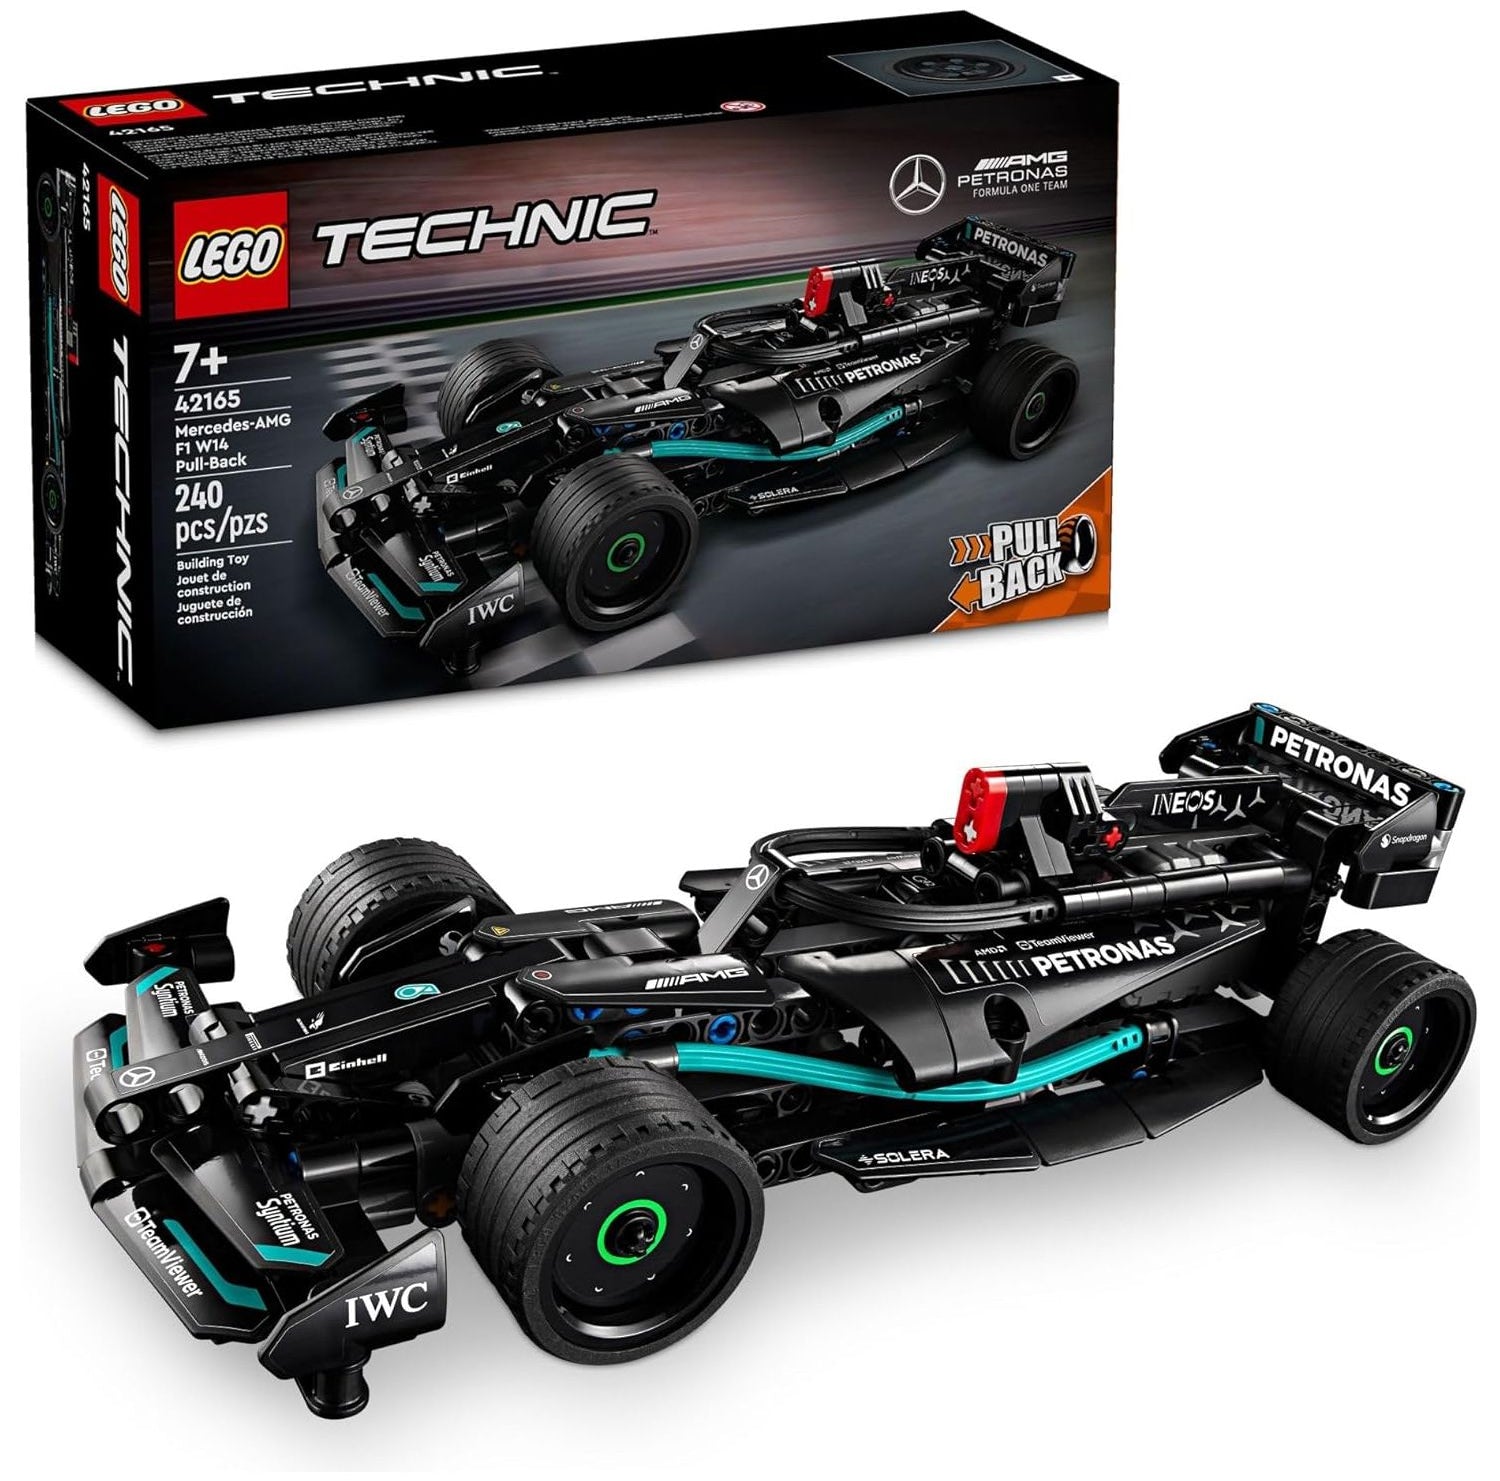 LEGO 42165 Technic Mercedes-AMG F1 W14 E Performance Pull-Back Car Toy, Mercedes Race Car Toy Model.